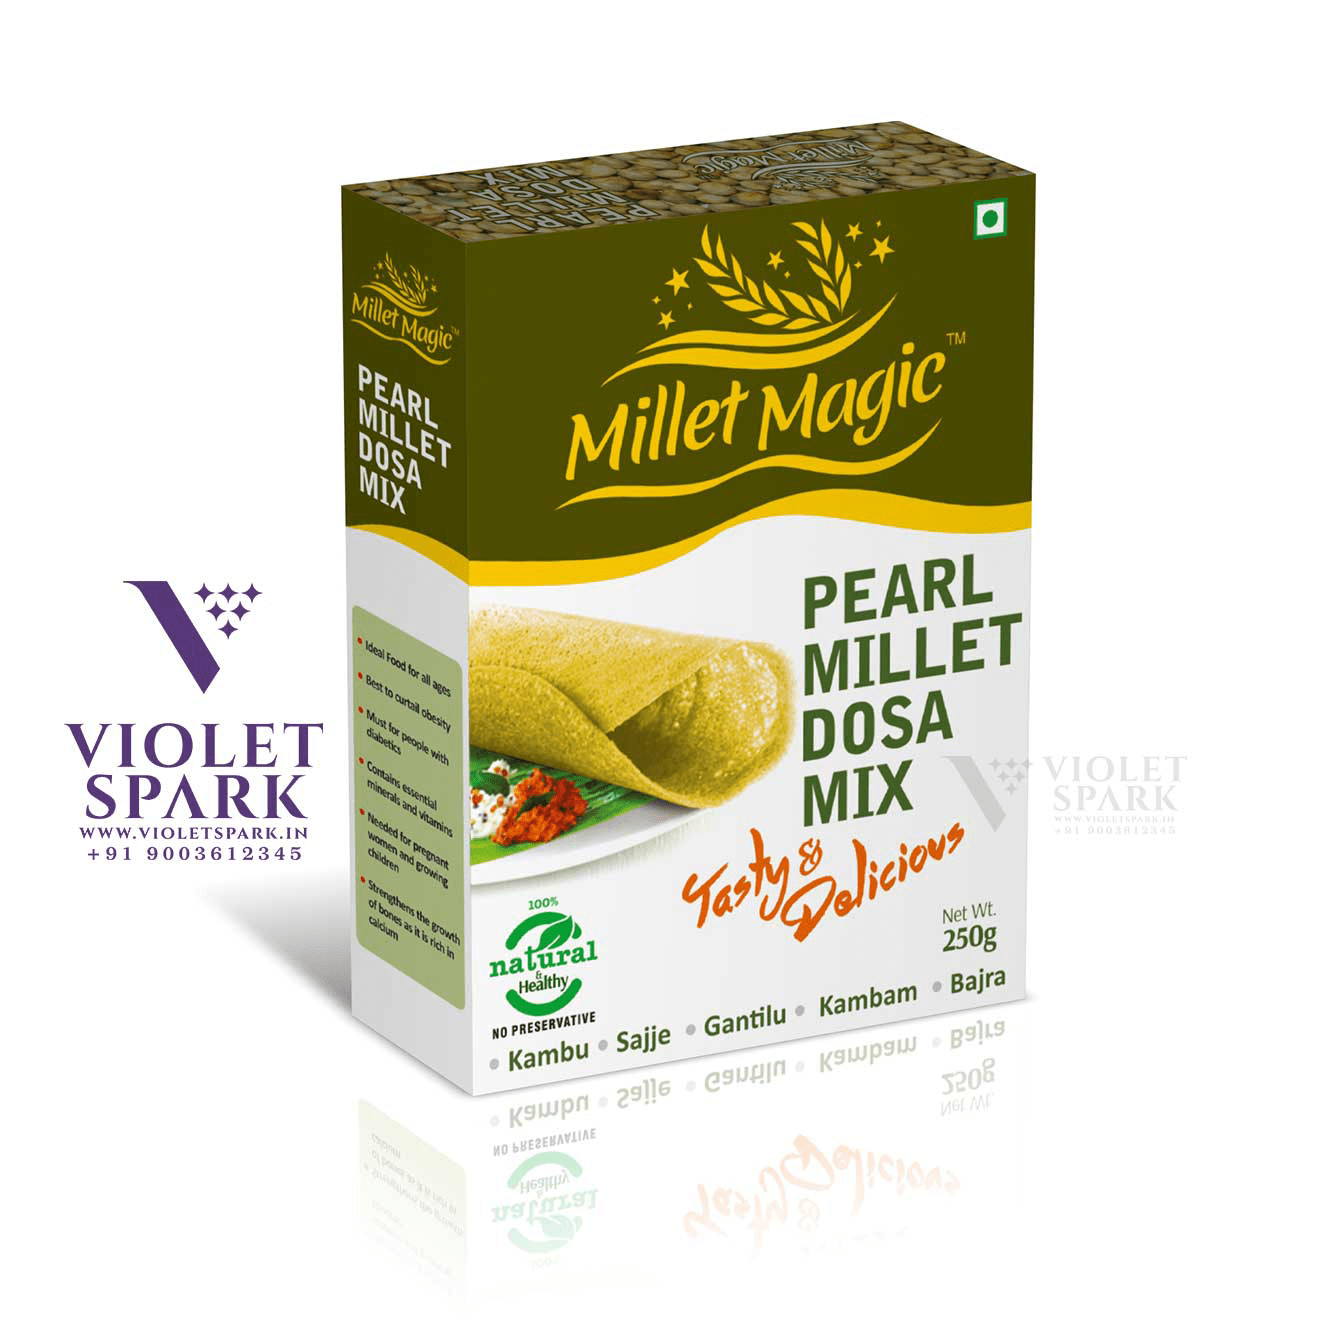 Millet Magic Pearl Millet Dosa Mix Branding Packaging Design Digital Marketing in Hyderabad by Violet Spark